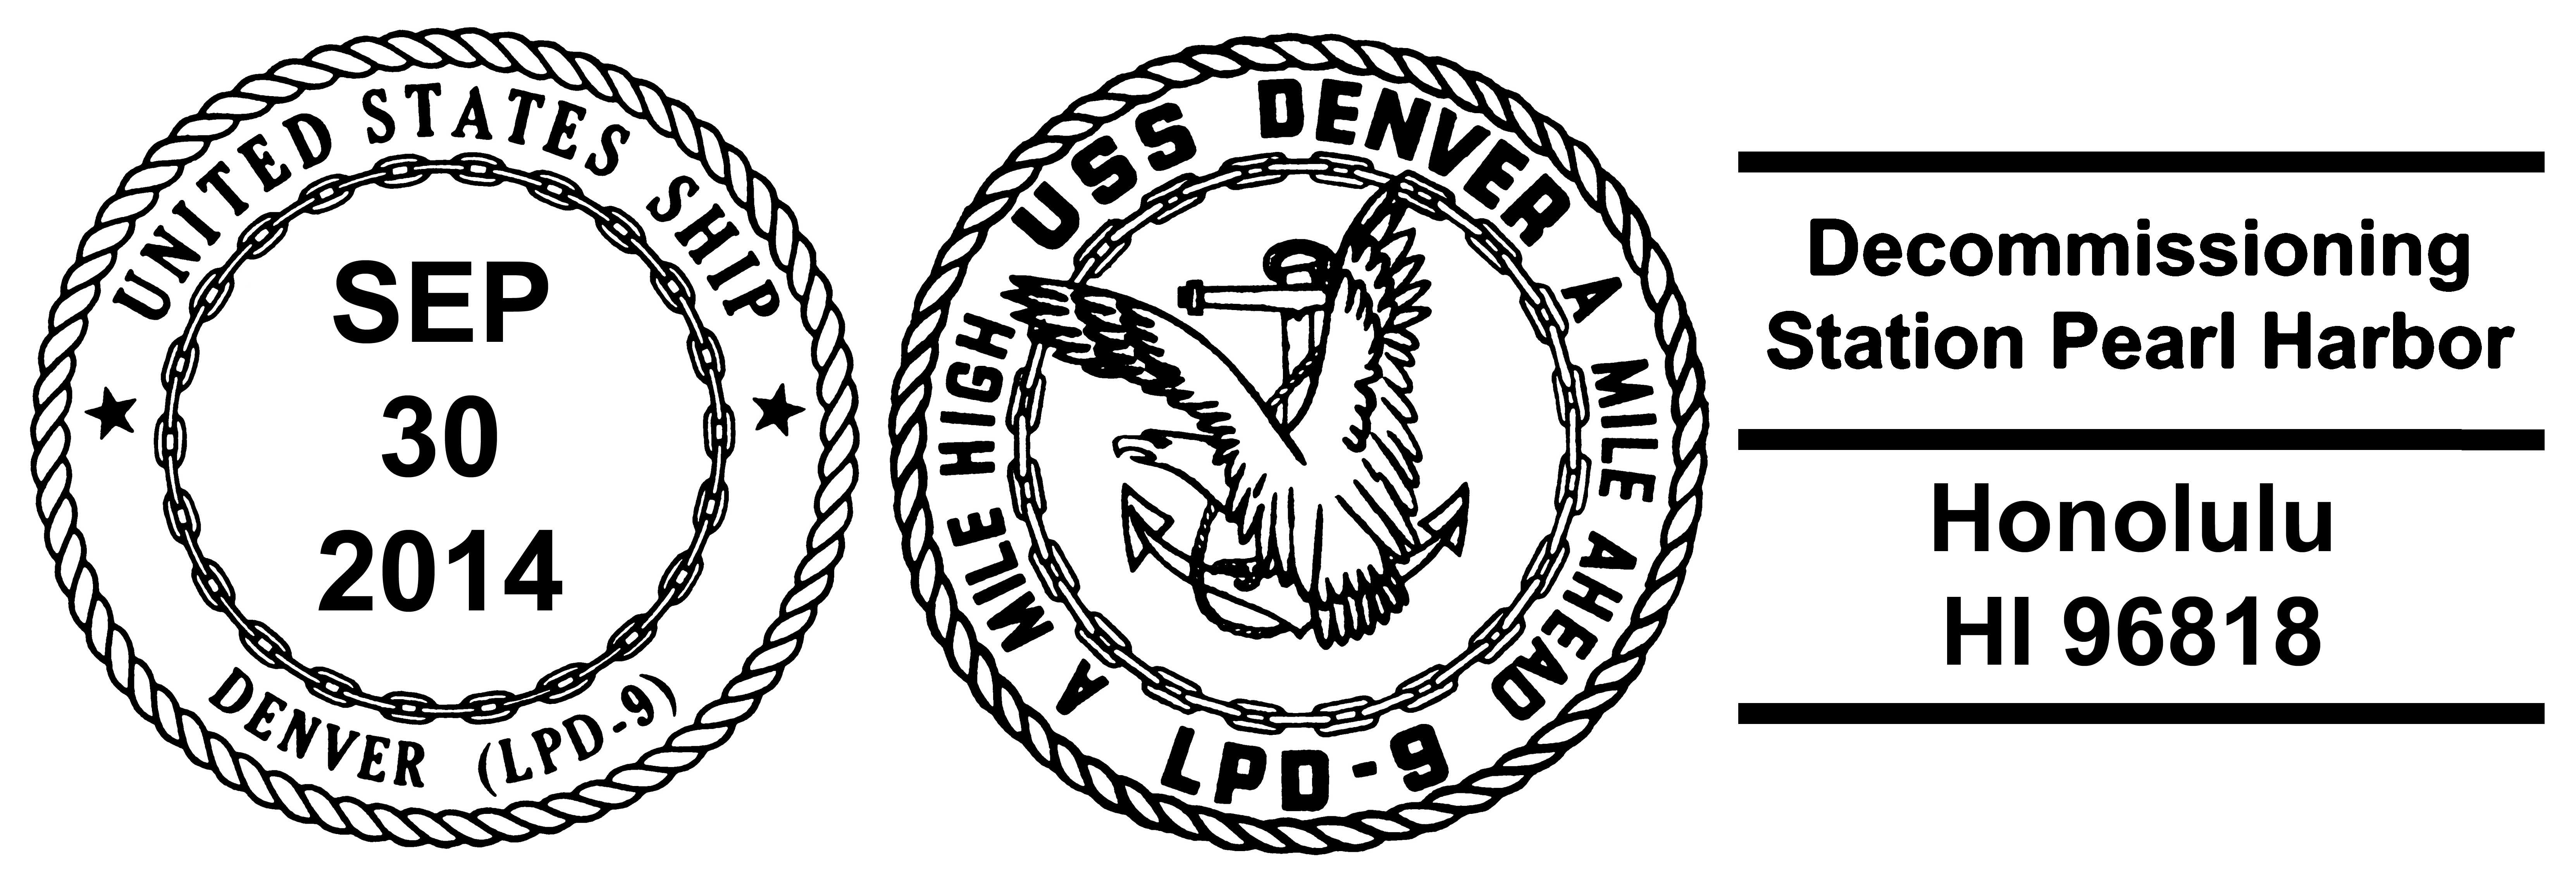 Sonderpoststempel USS DENVER LPD-9 Decommissioning Design: Wolfgang Hechler